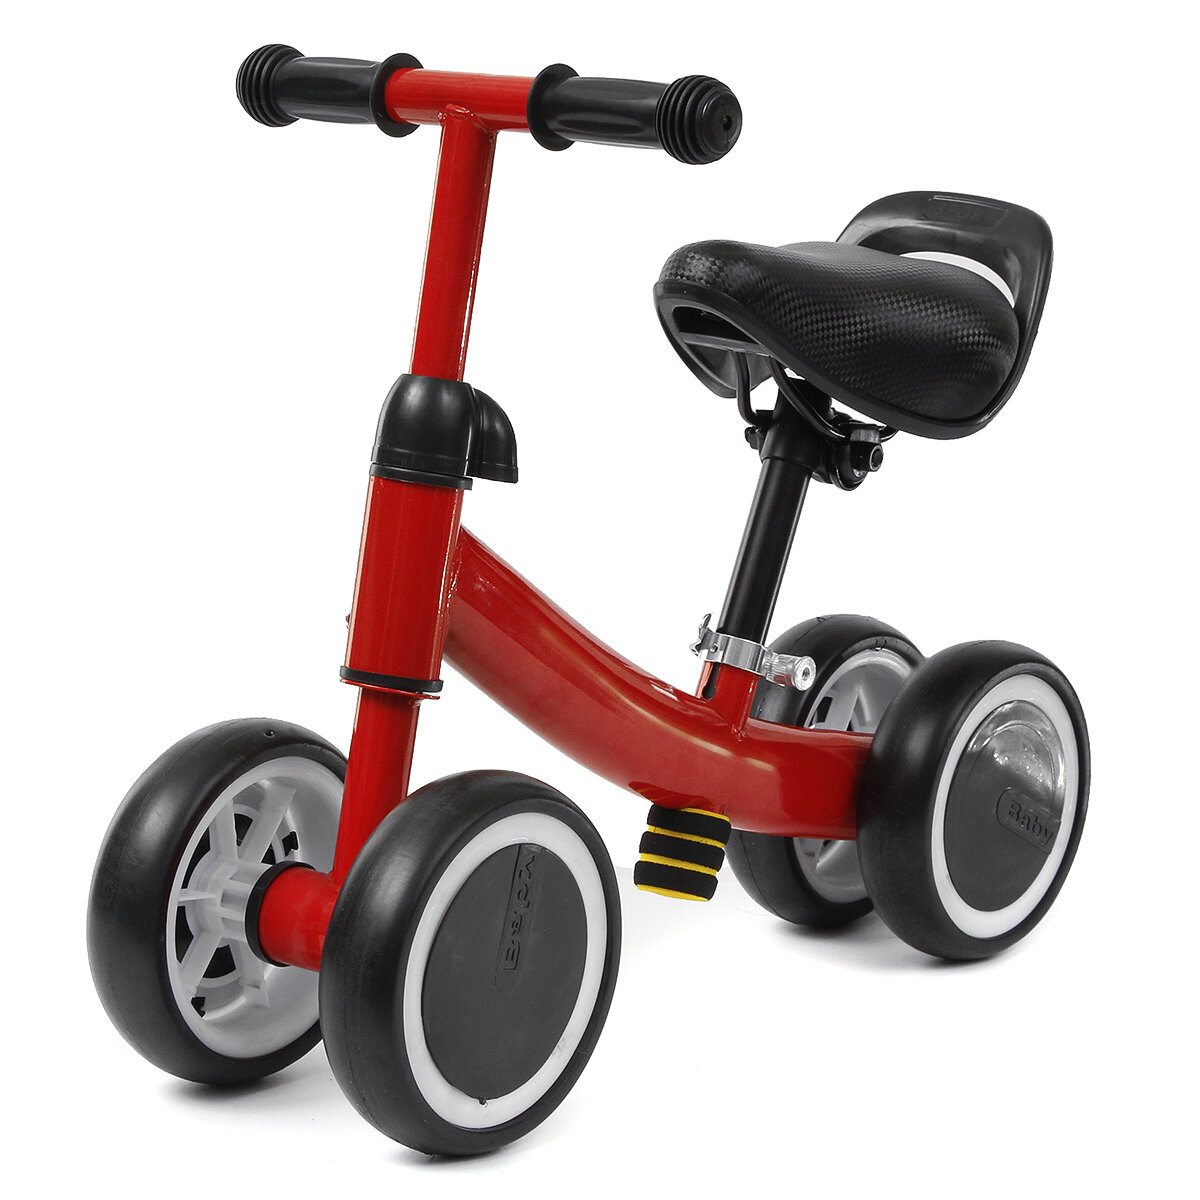 4 wheel bike for kids